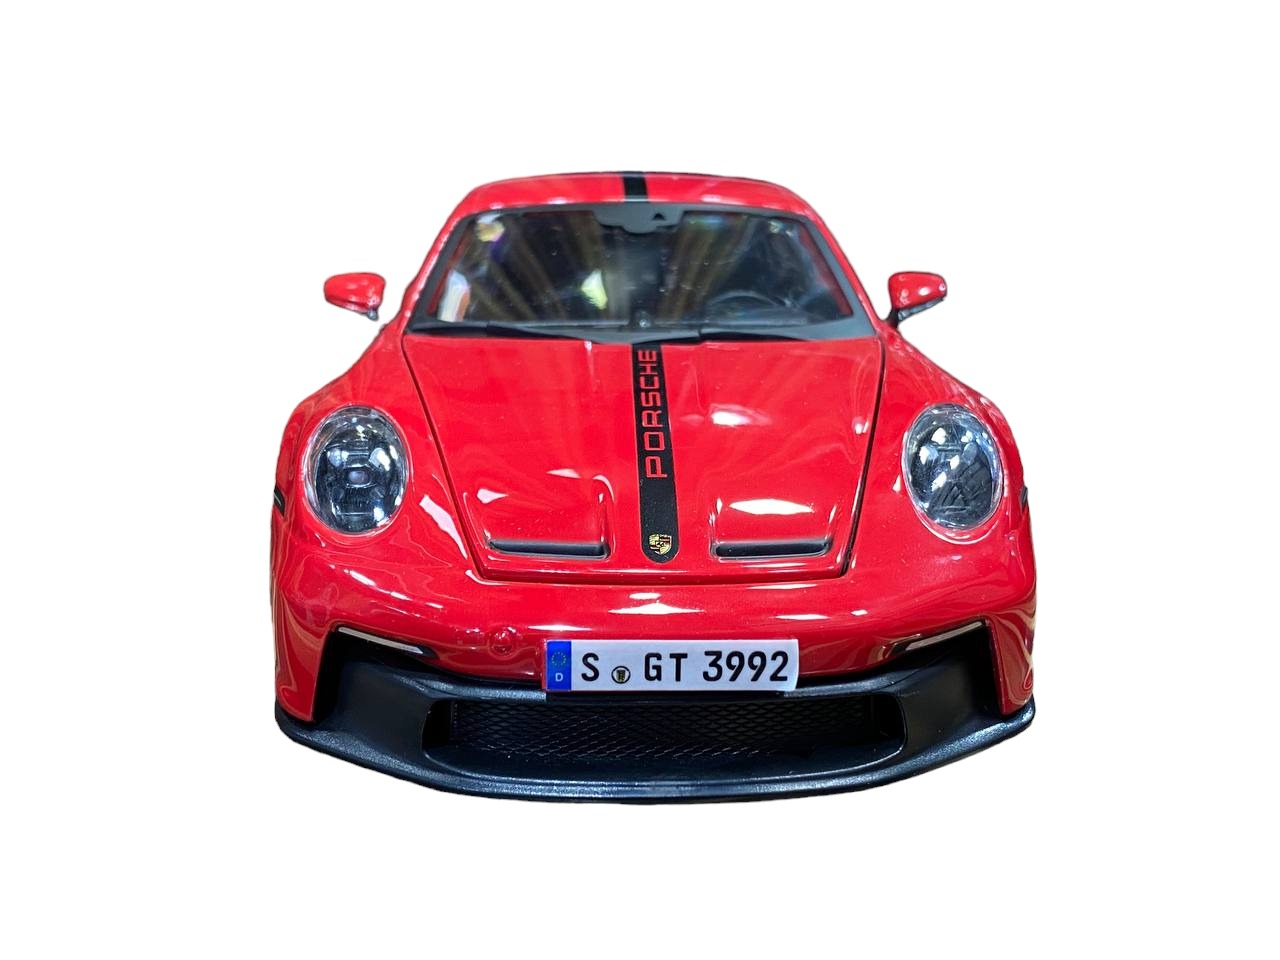 1/18 Diecast Metal Maisto Porsche 911 GT3 Red Model Car